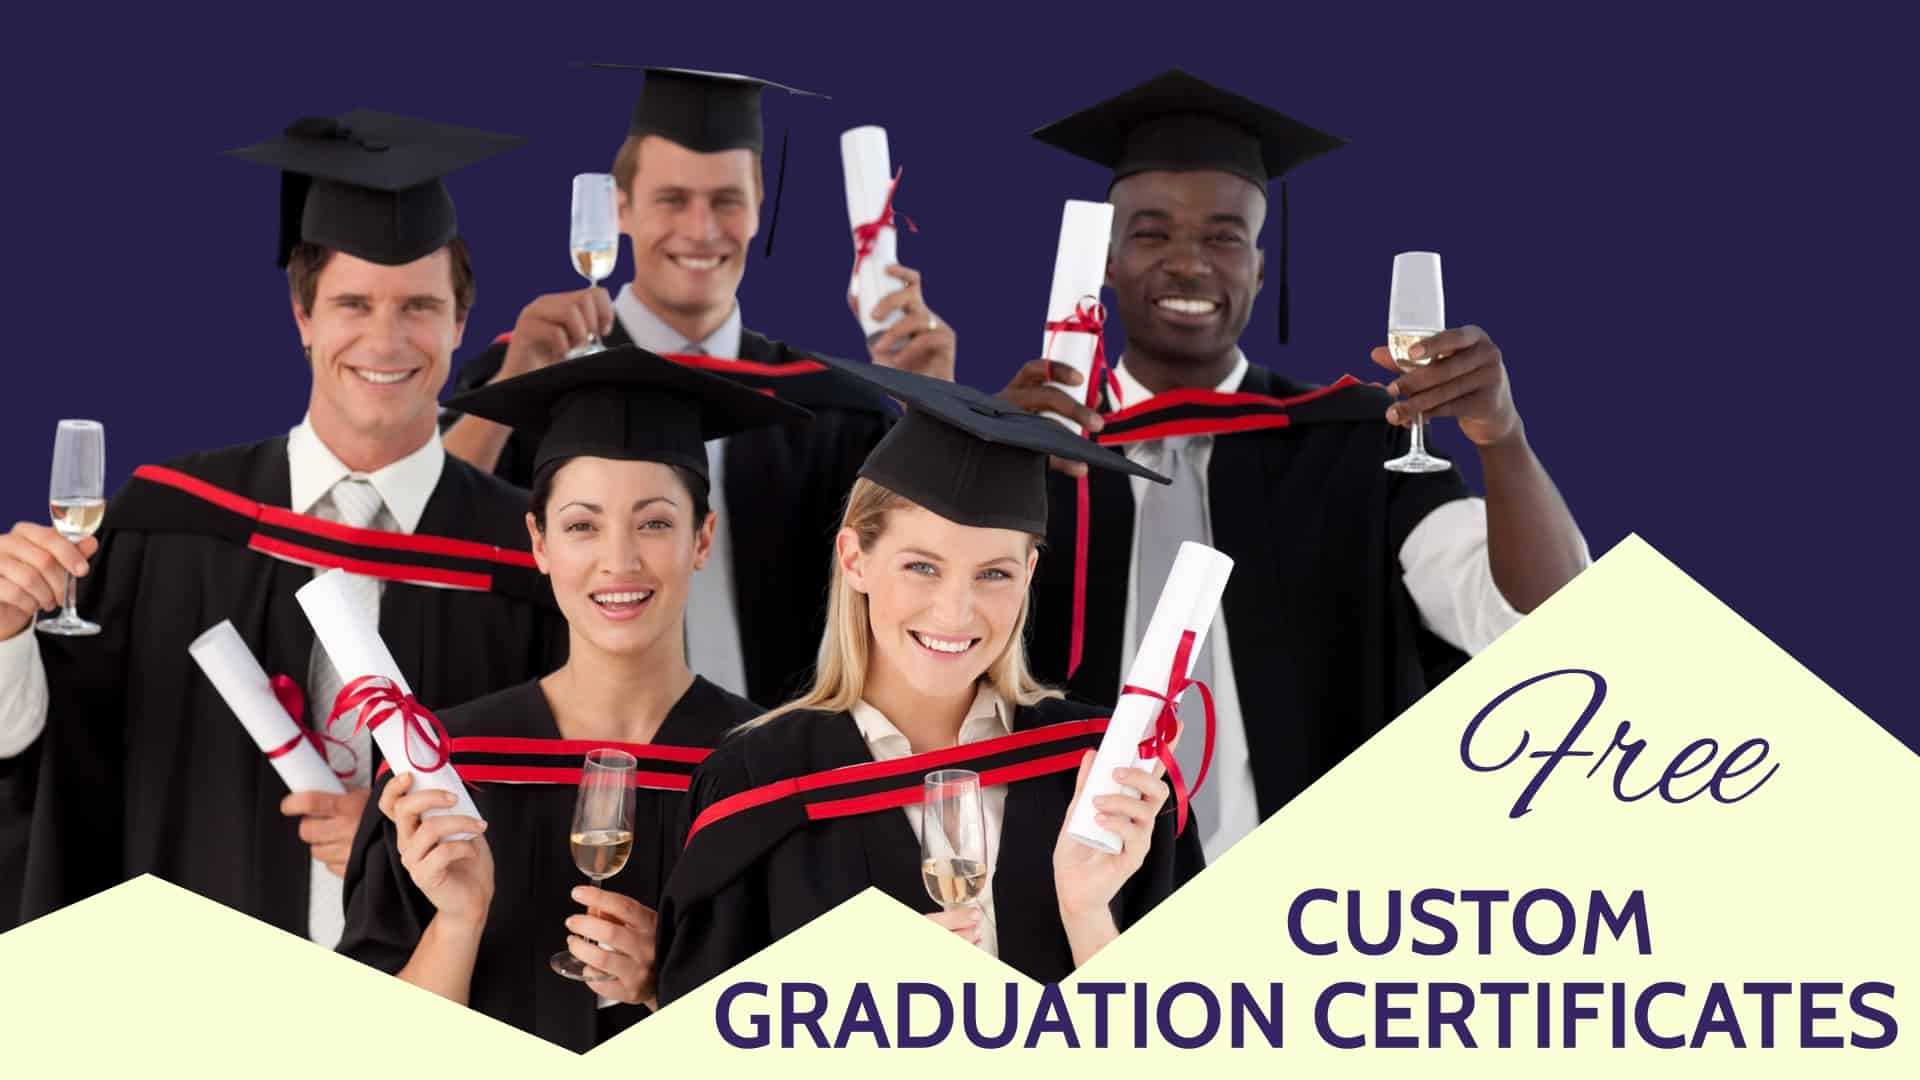 Free Graduation Certificate Templates | Customize Online For Free Printable Graduation Certificate Templates